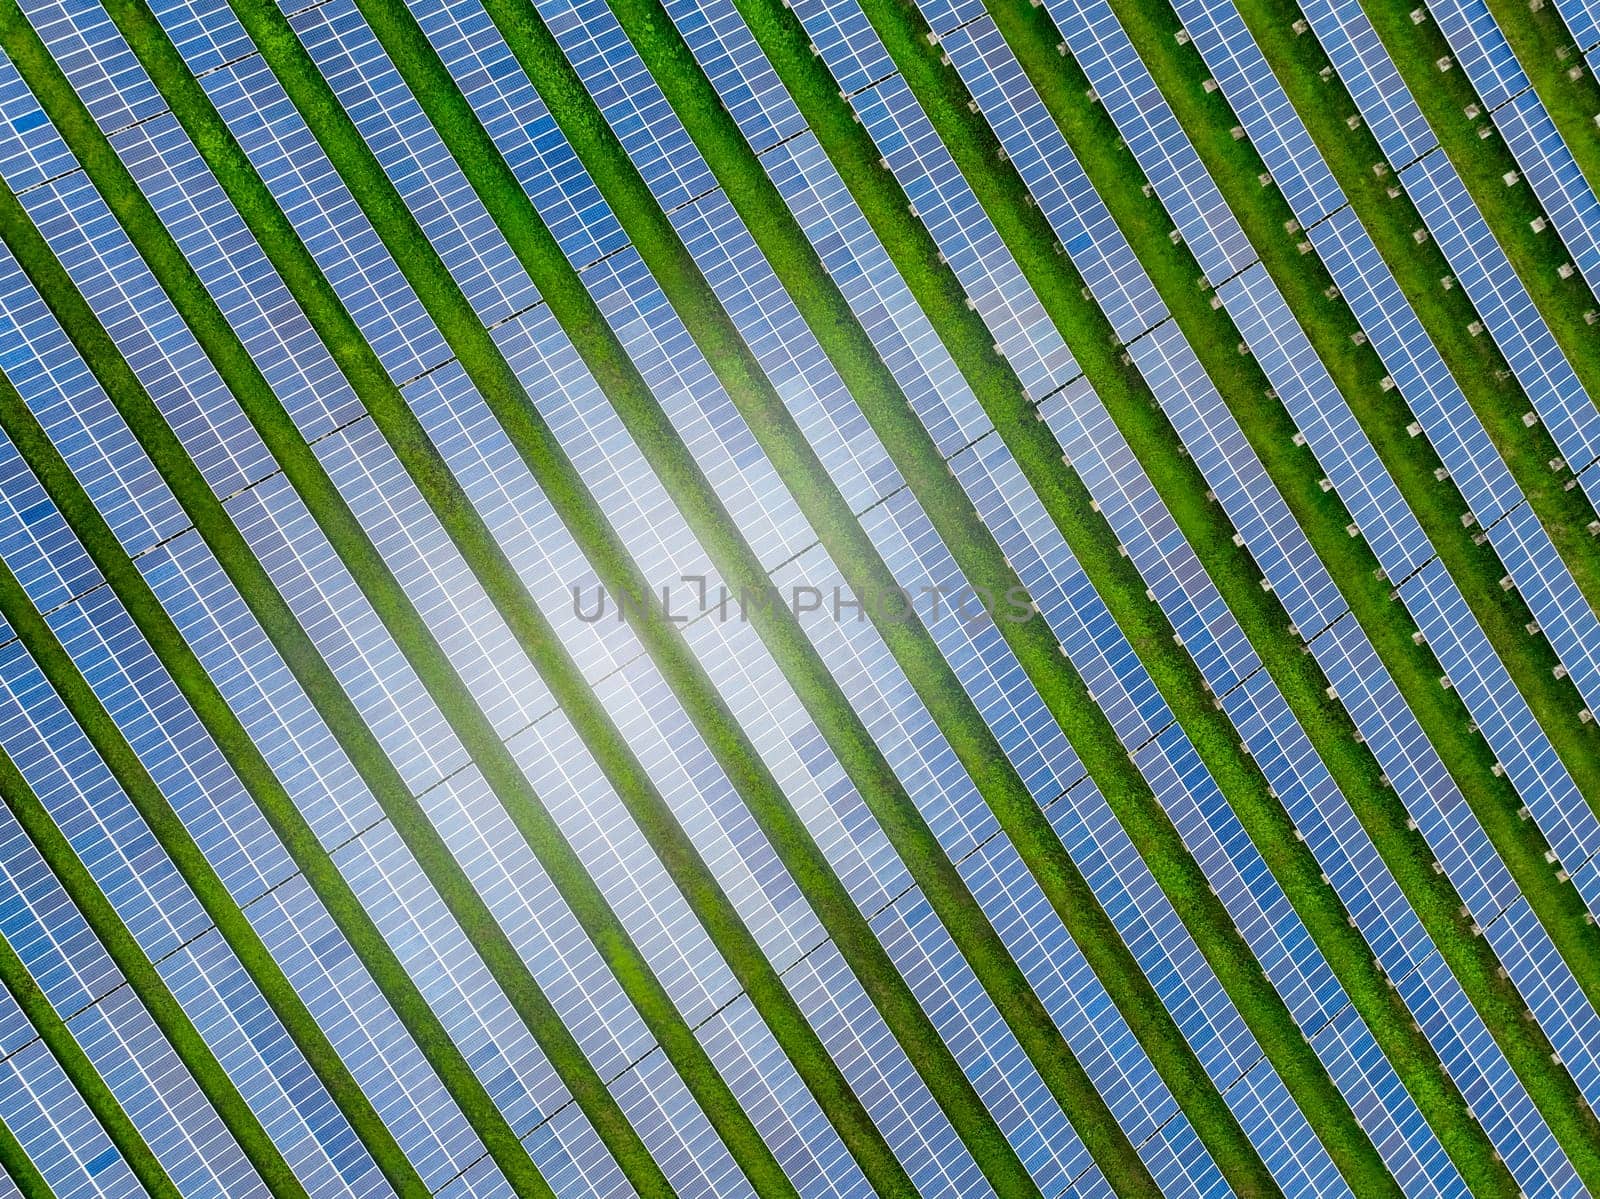 Solar farm and sun light. Solar power for green energy. Sustainable renewable energy. Photovoltaic power station or solar park. Solar panel installation and maintenance concept. Energy sustainability. by Fahroni